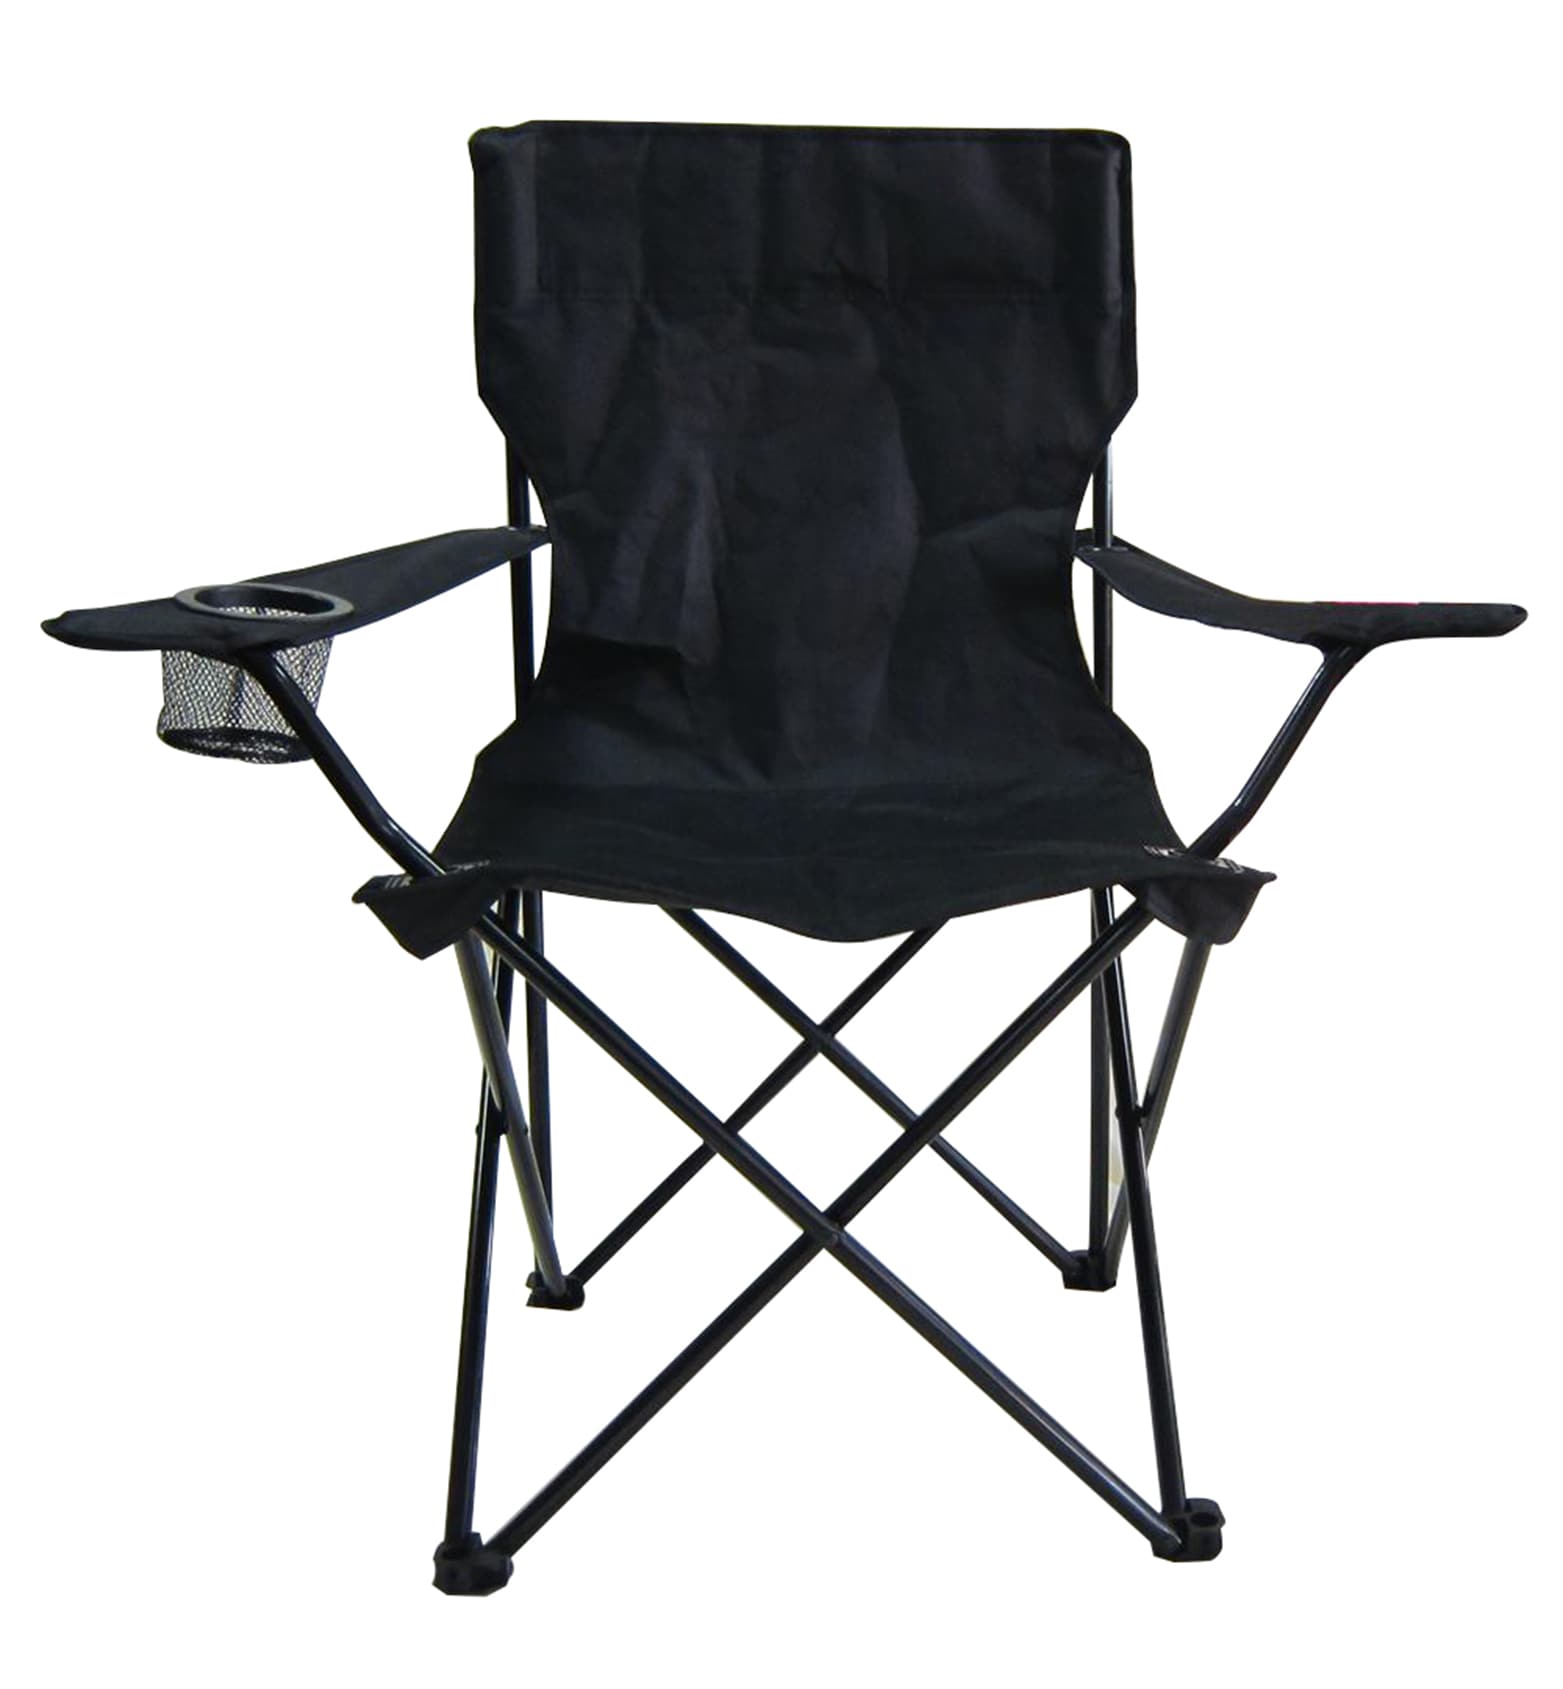 2 x Metal Garden Armchair Folding Low Portable Camping Beach Chairs Black 